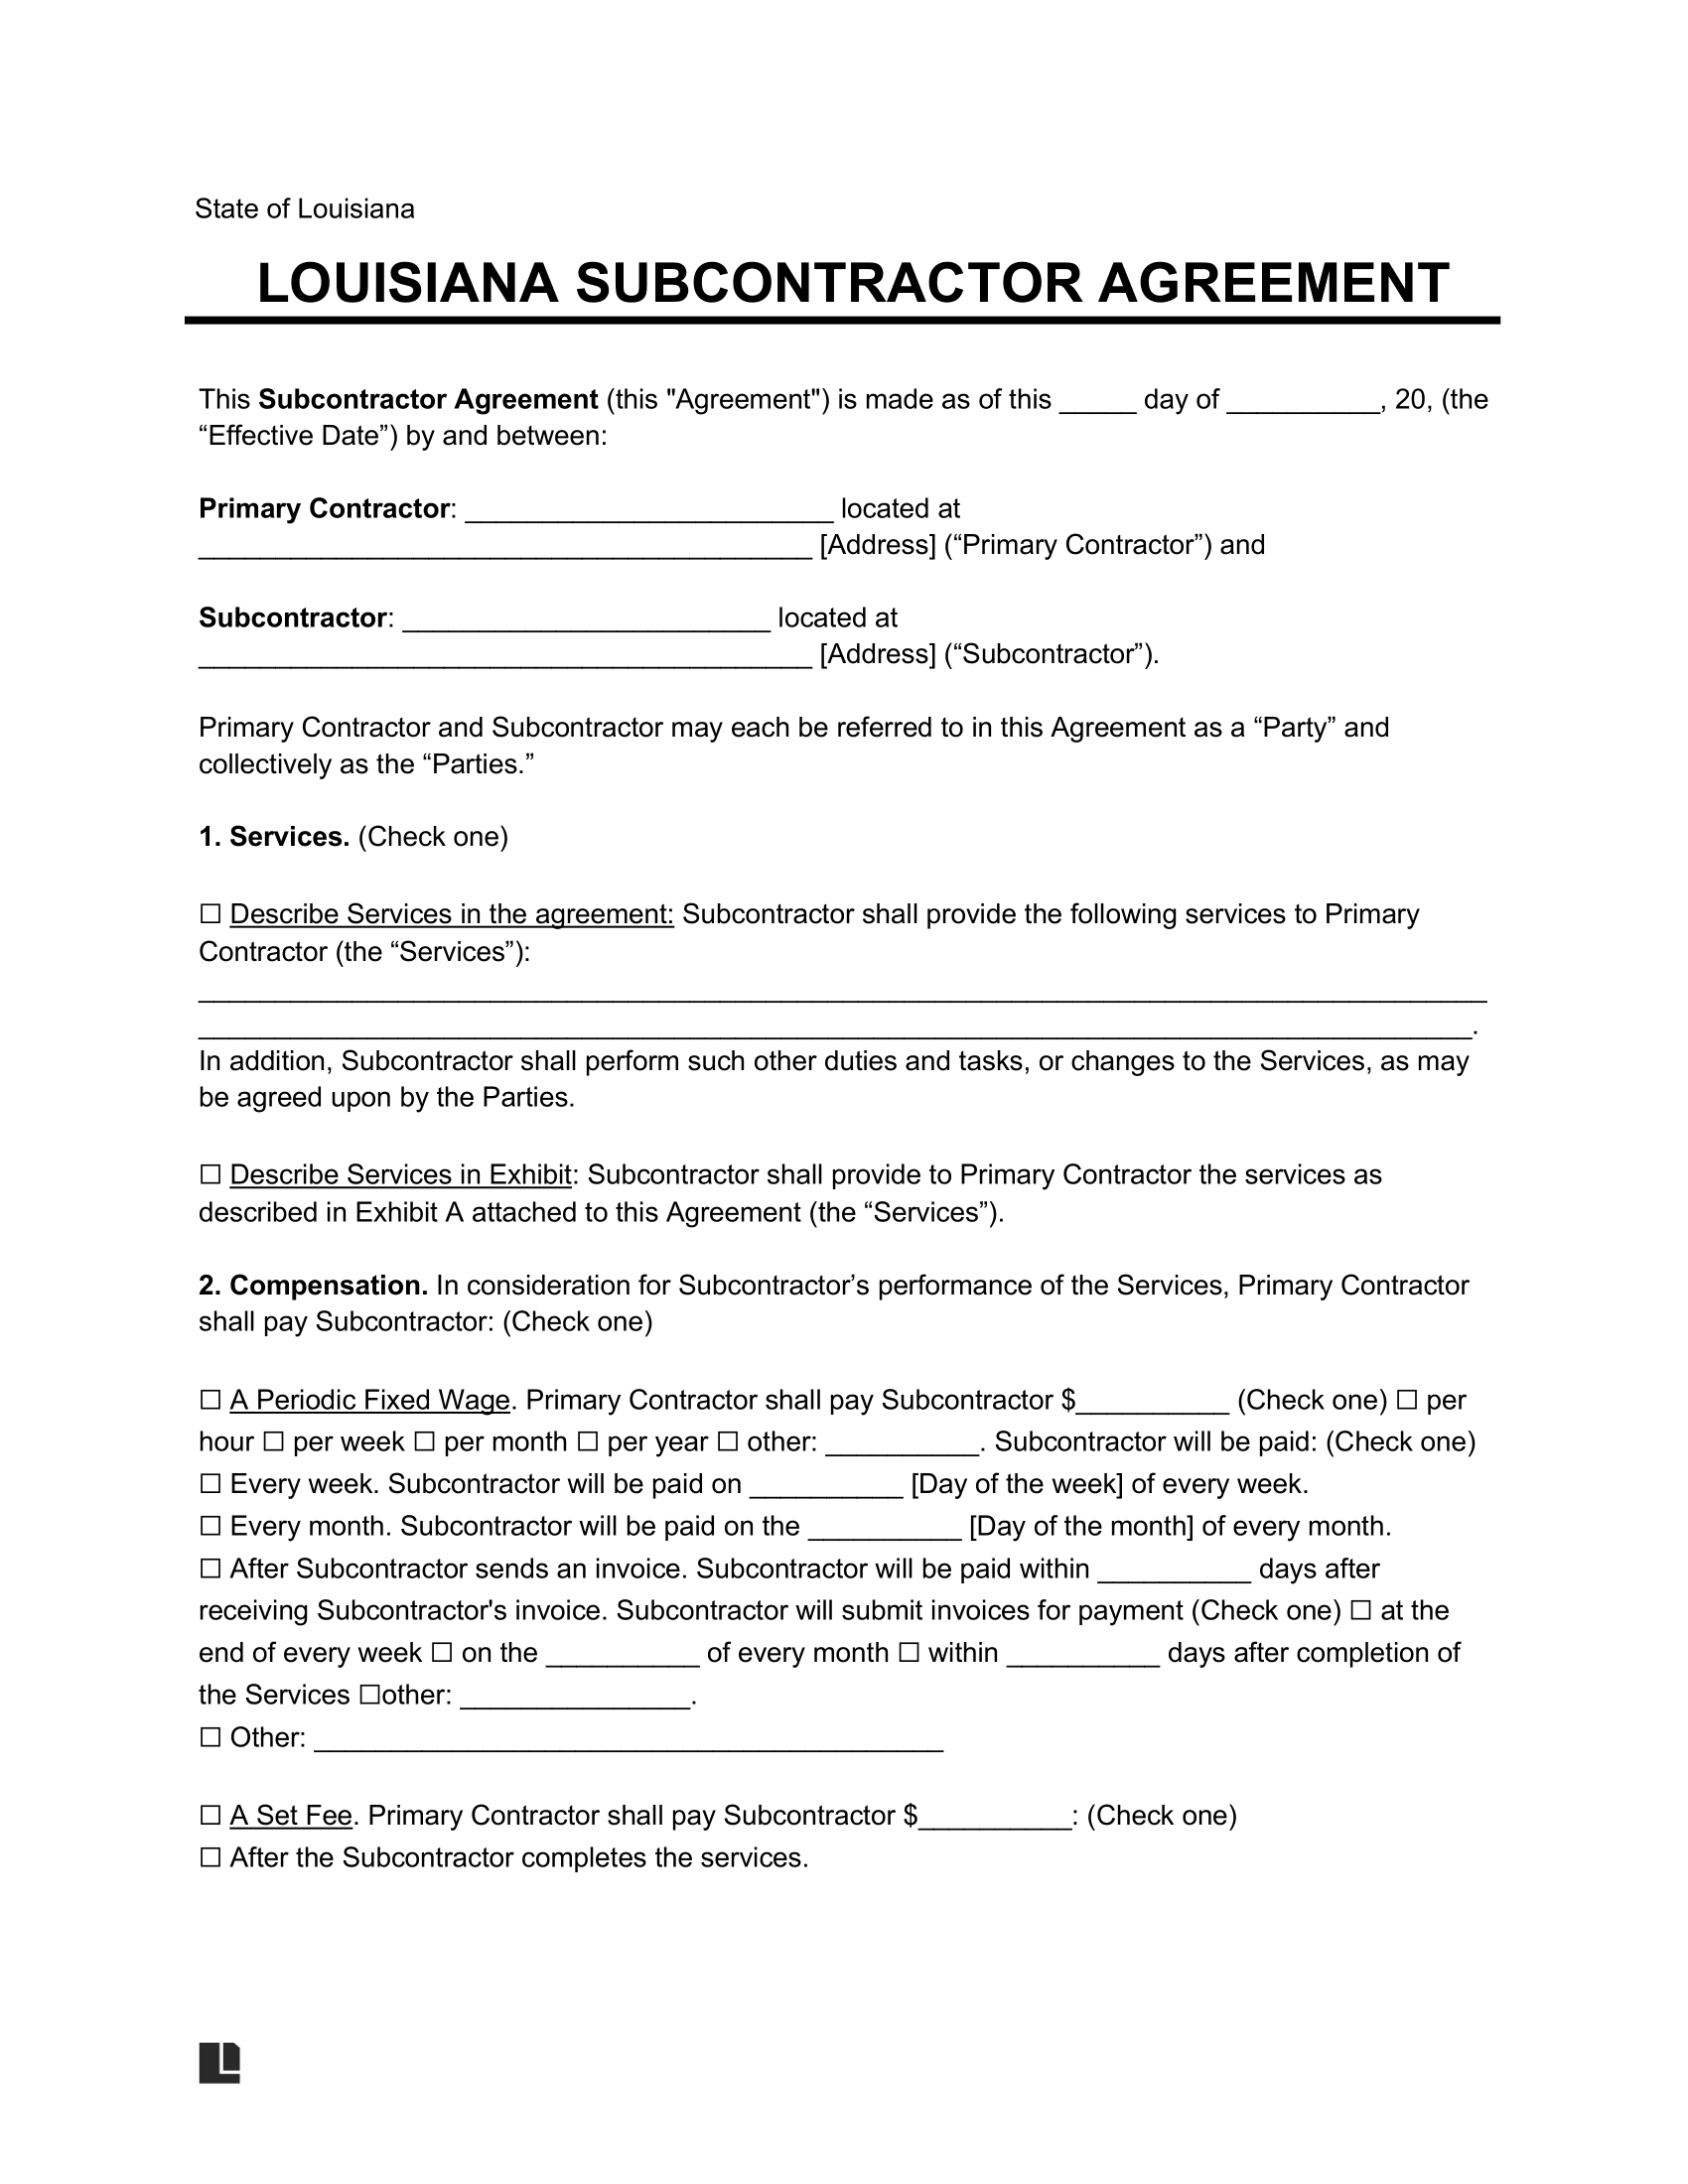 louisiana subcontractor agreement template